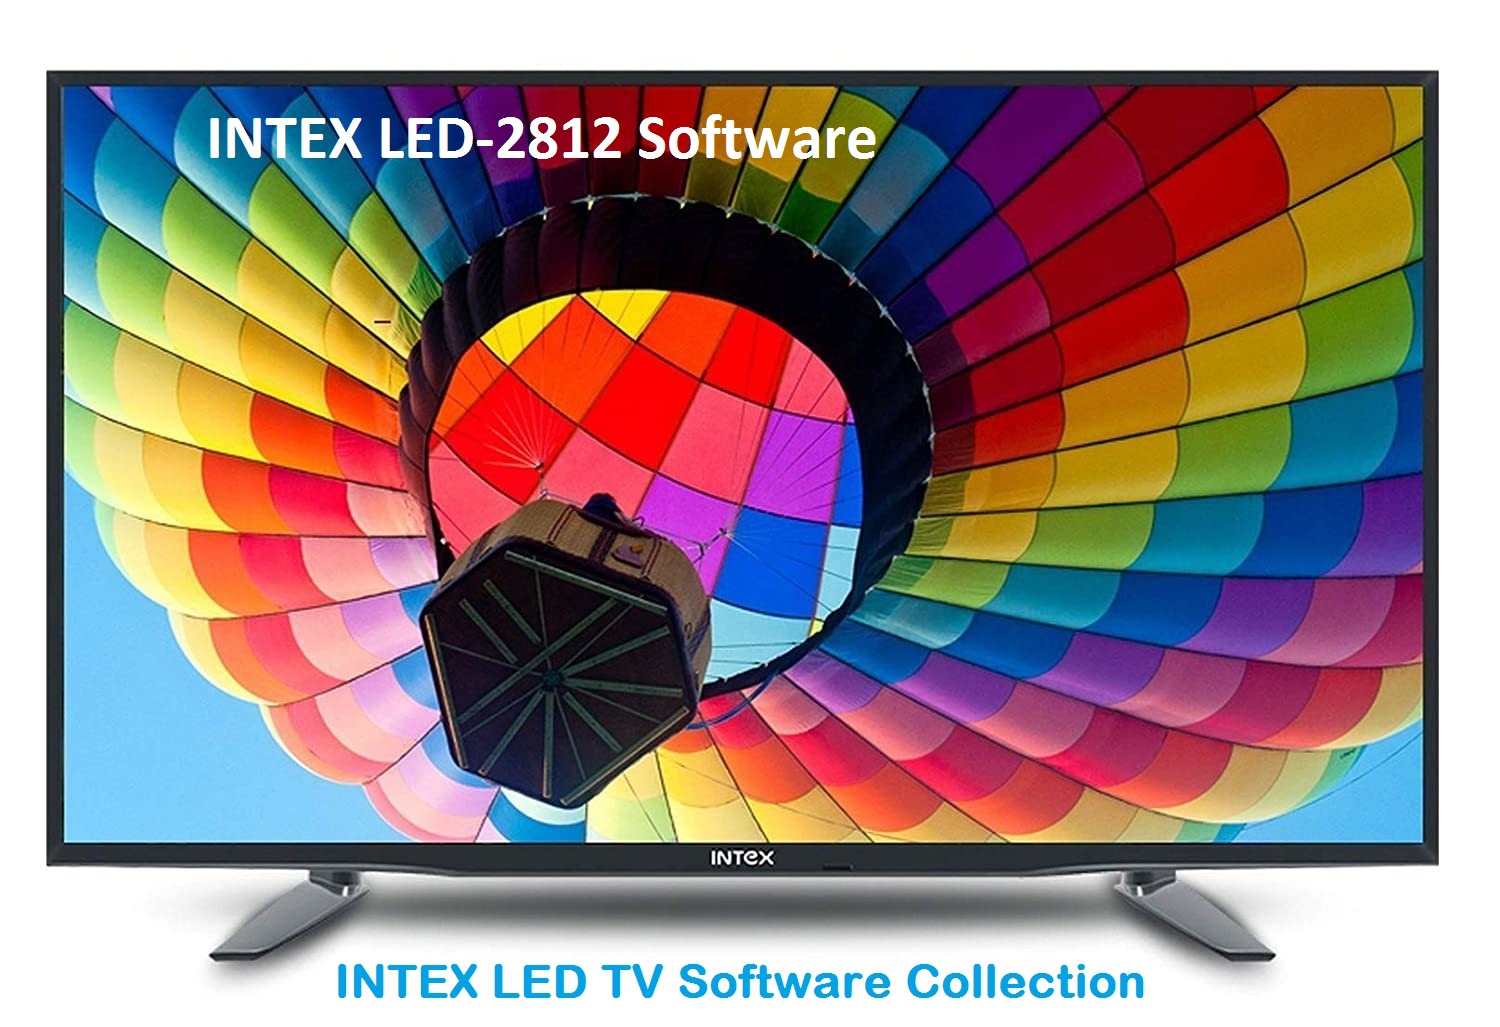 Intex Led-2812